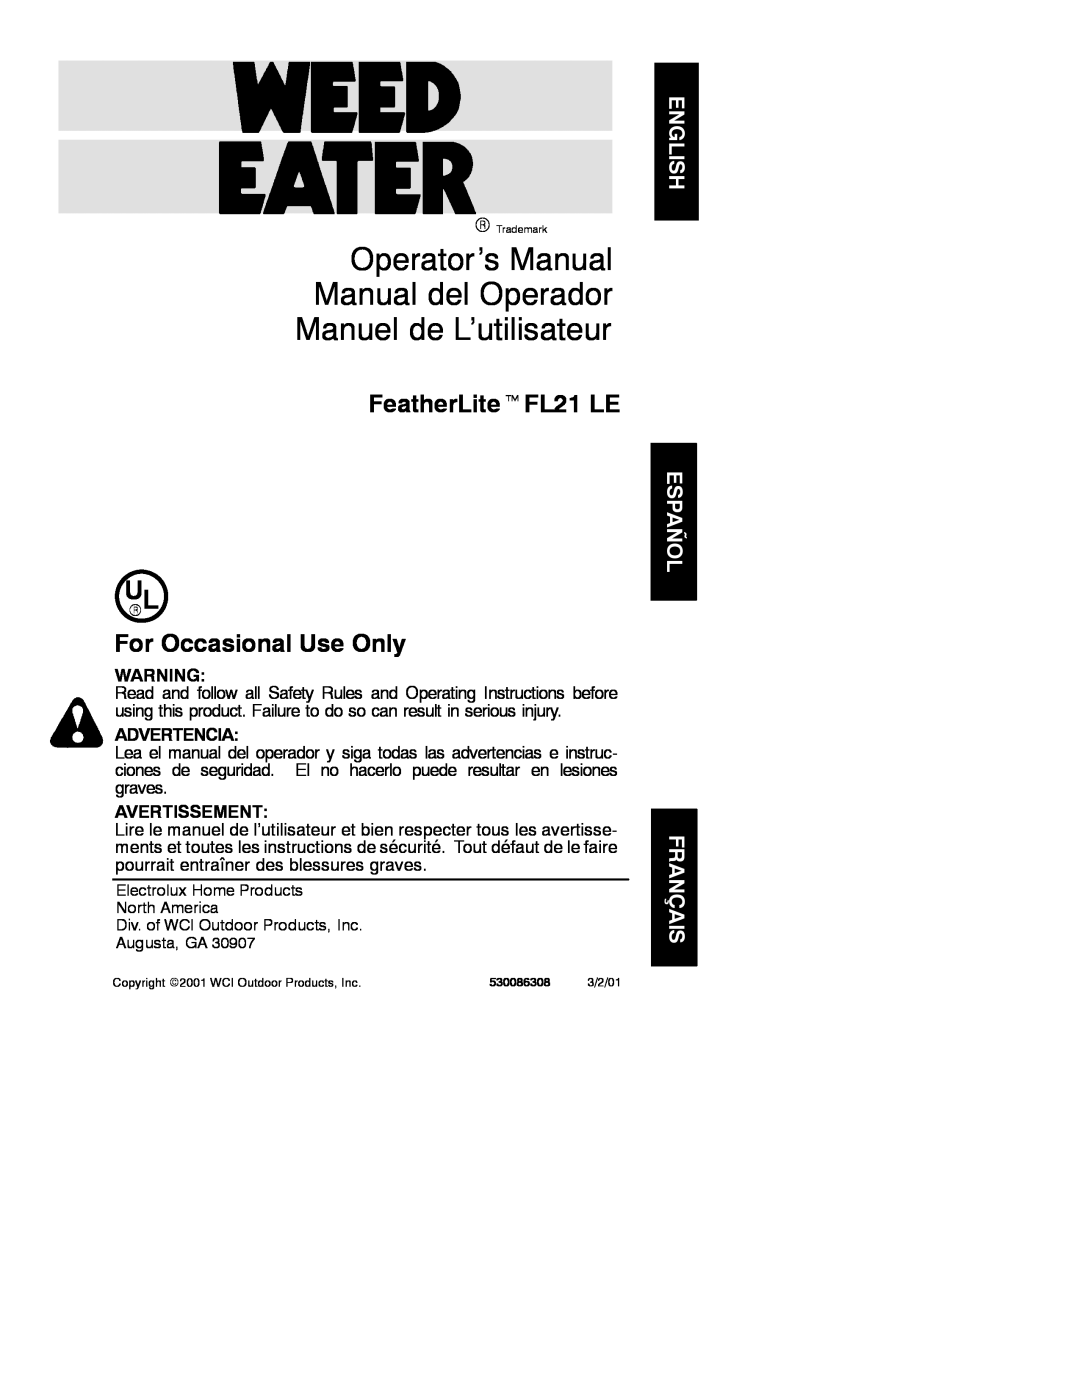 Weed Eater 530086308 manual Operator’s Manual Manual del Operador Manuel de L’utilisateur, FeatherLitetFL21 LE 